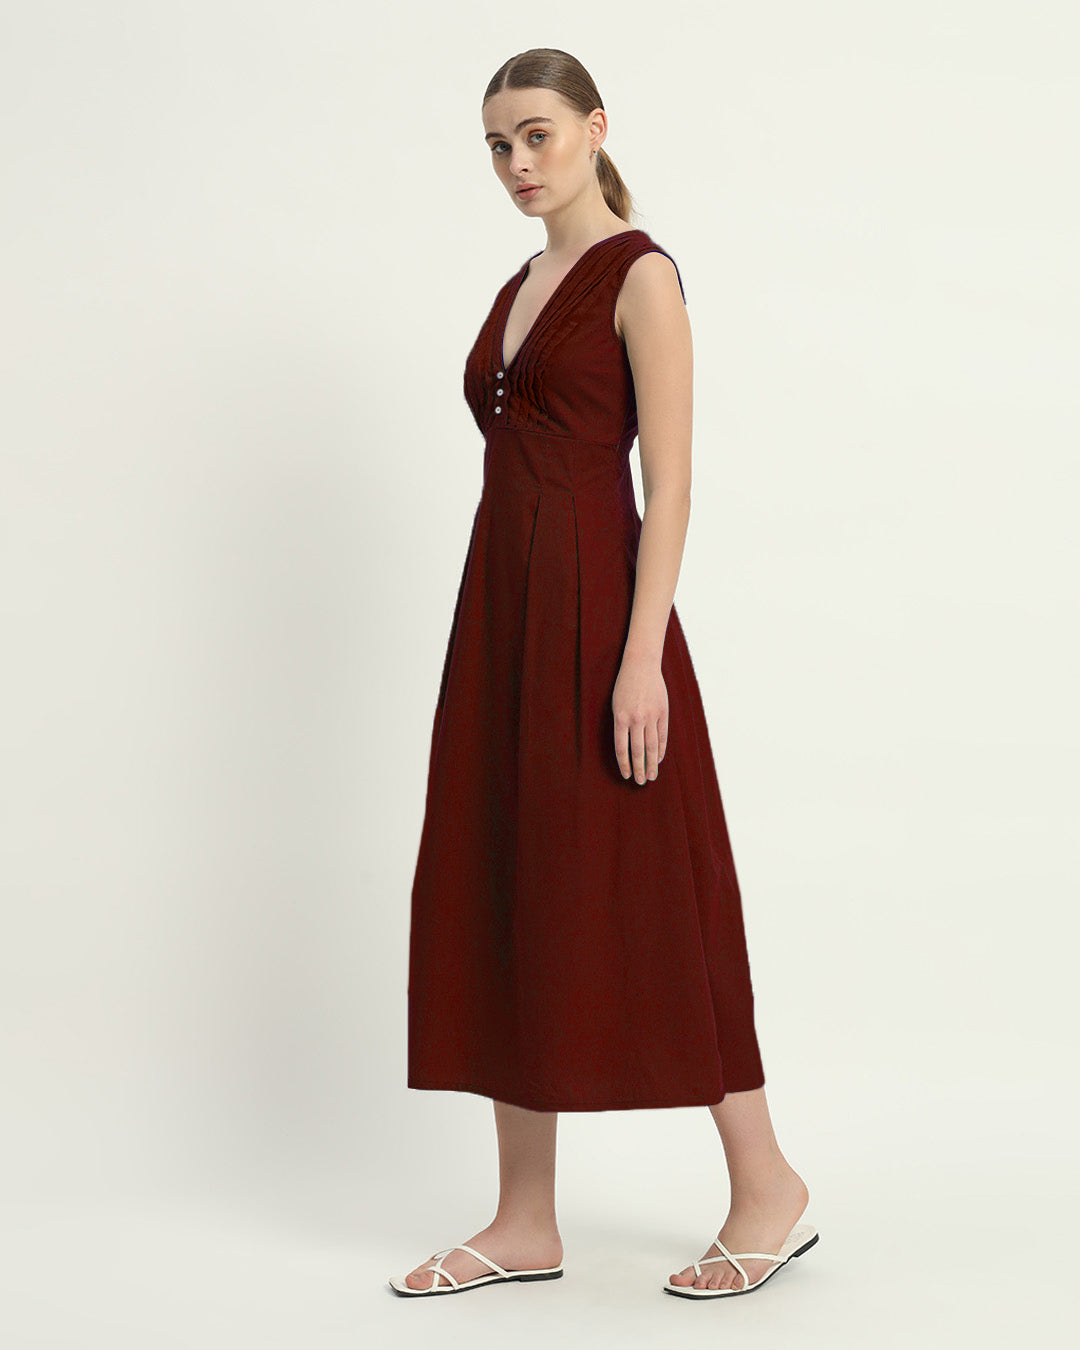 The Mendoza Rouge Cotton Dress